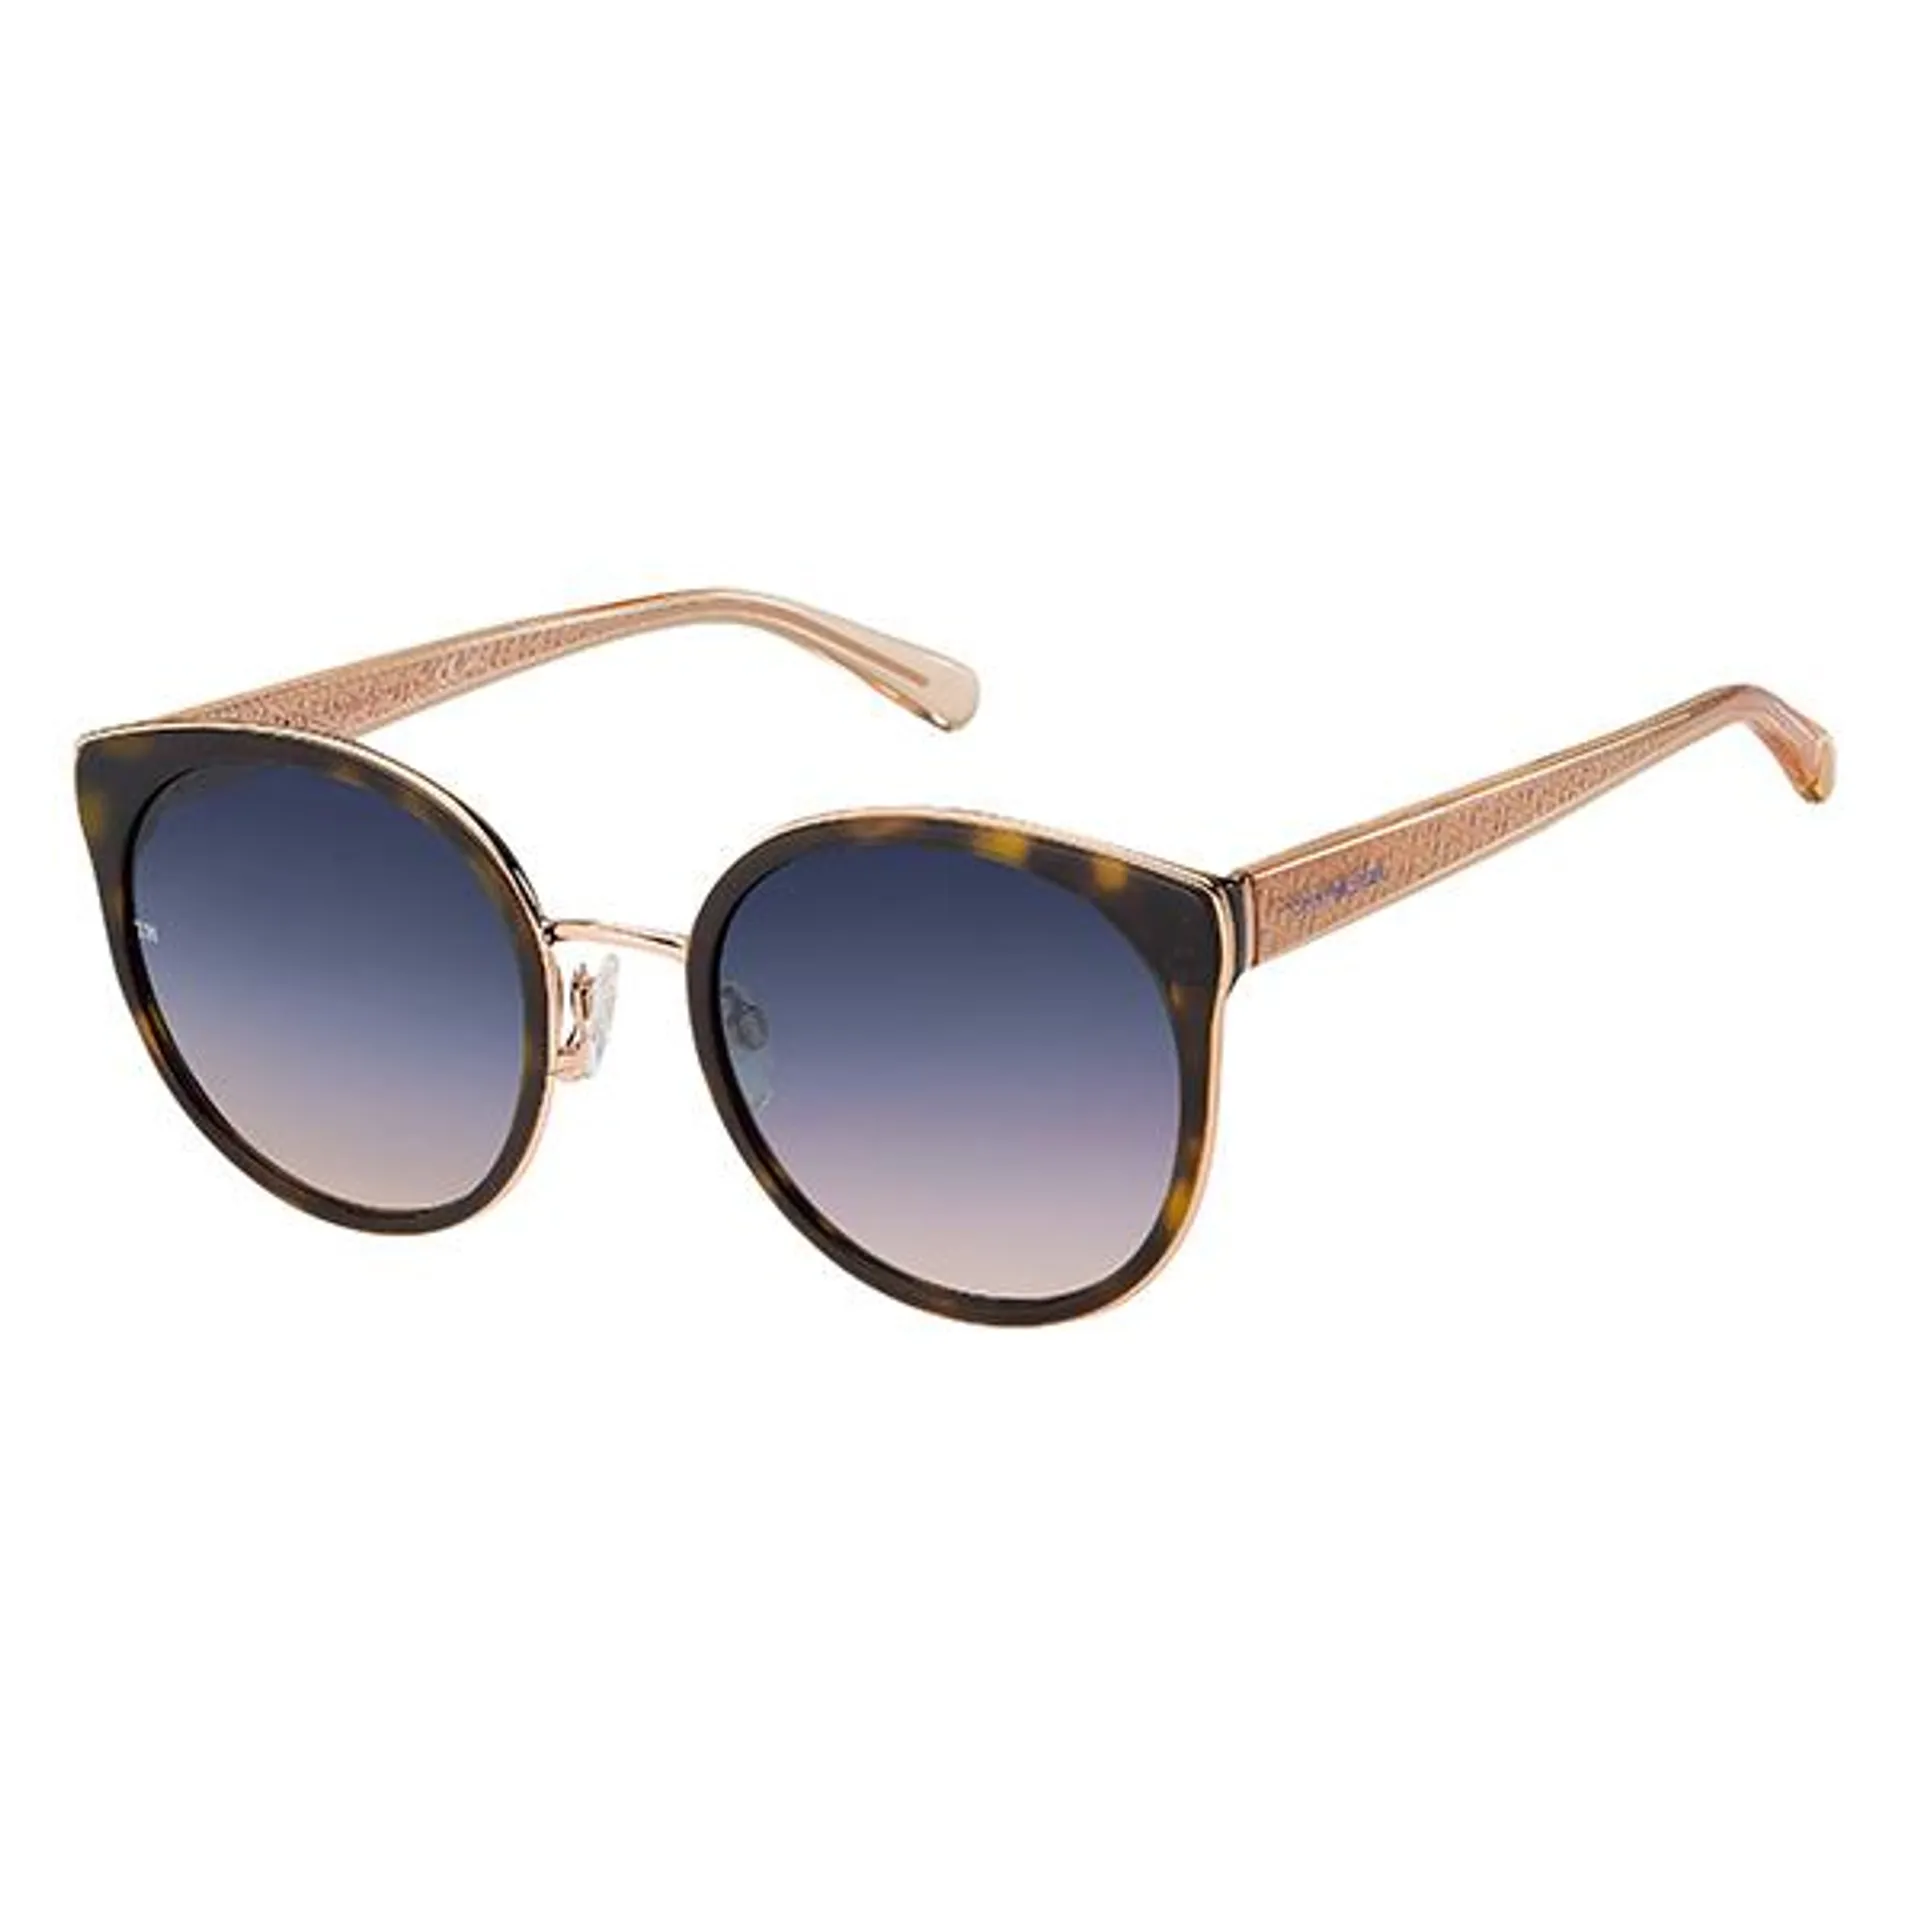 Tommy Hilfiger Women's Havana Sunglasses